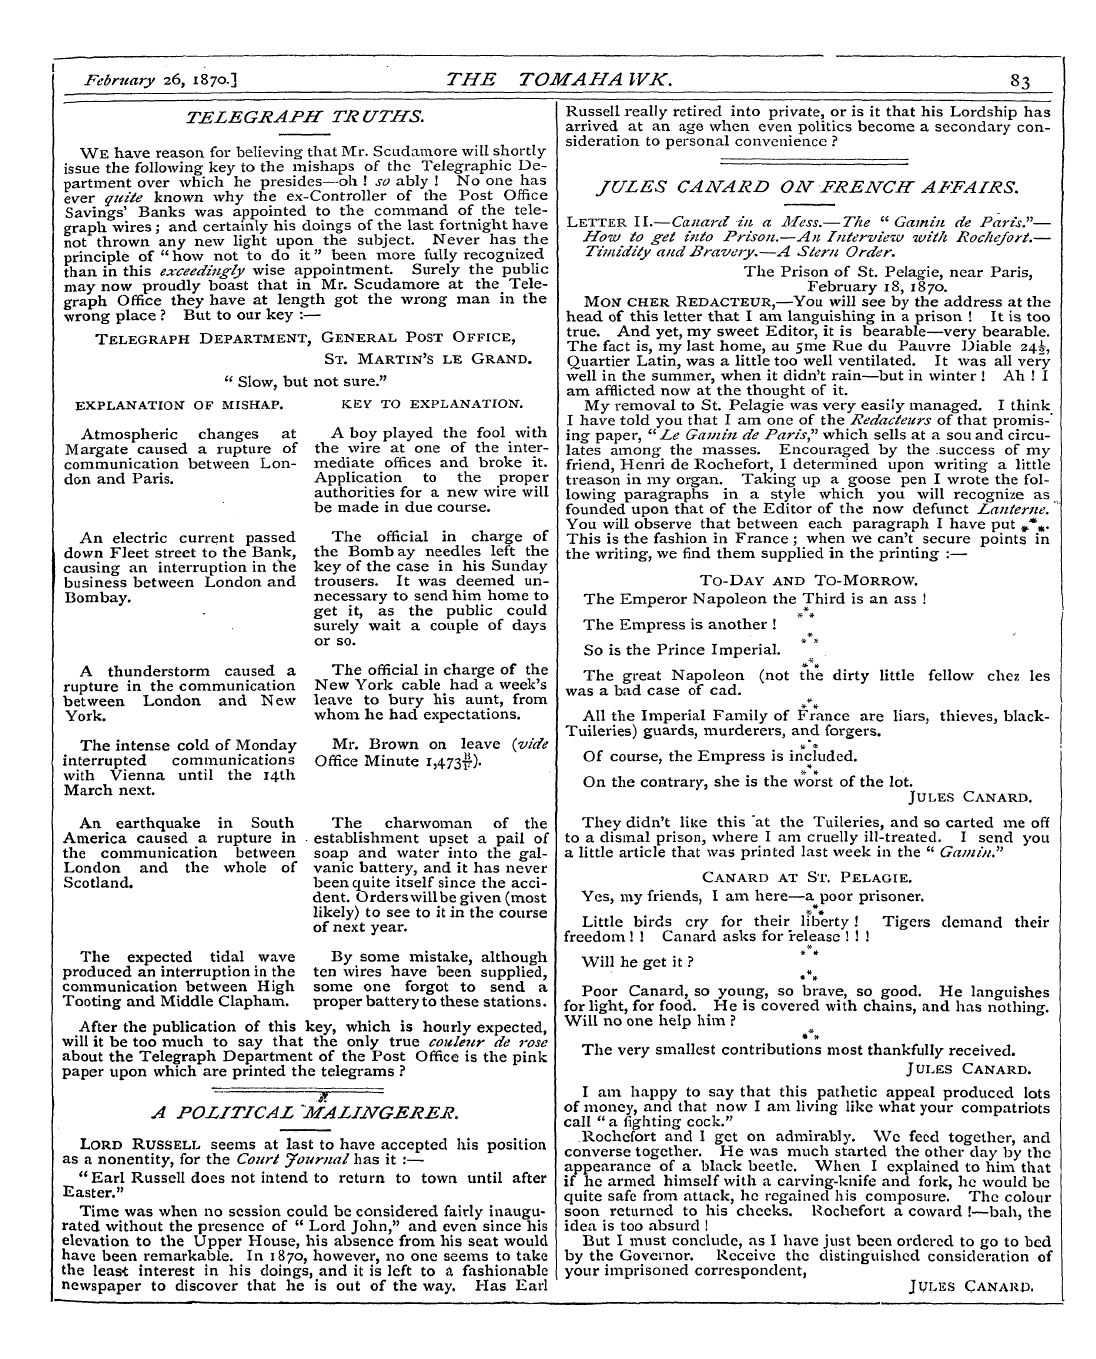 Tomahawk (1867-1870): jS F Y, 1st edition: 11